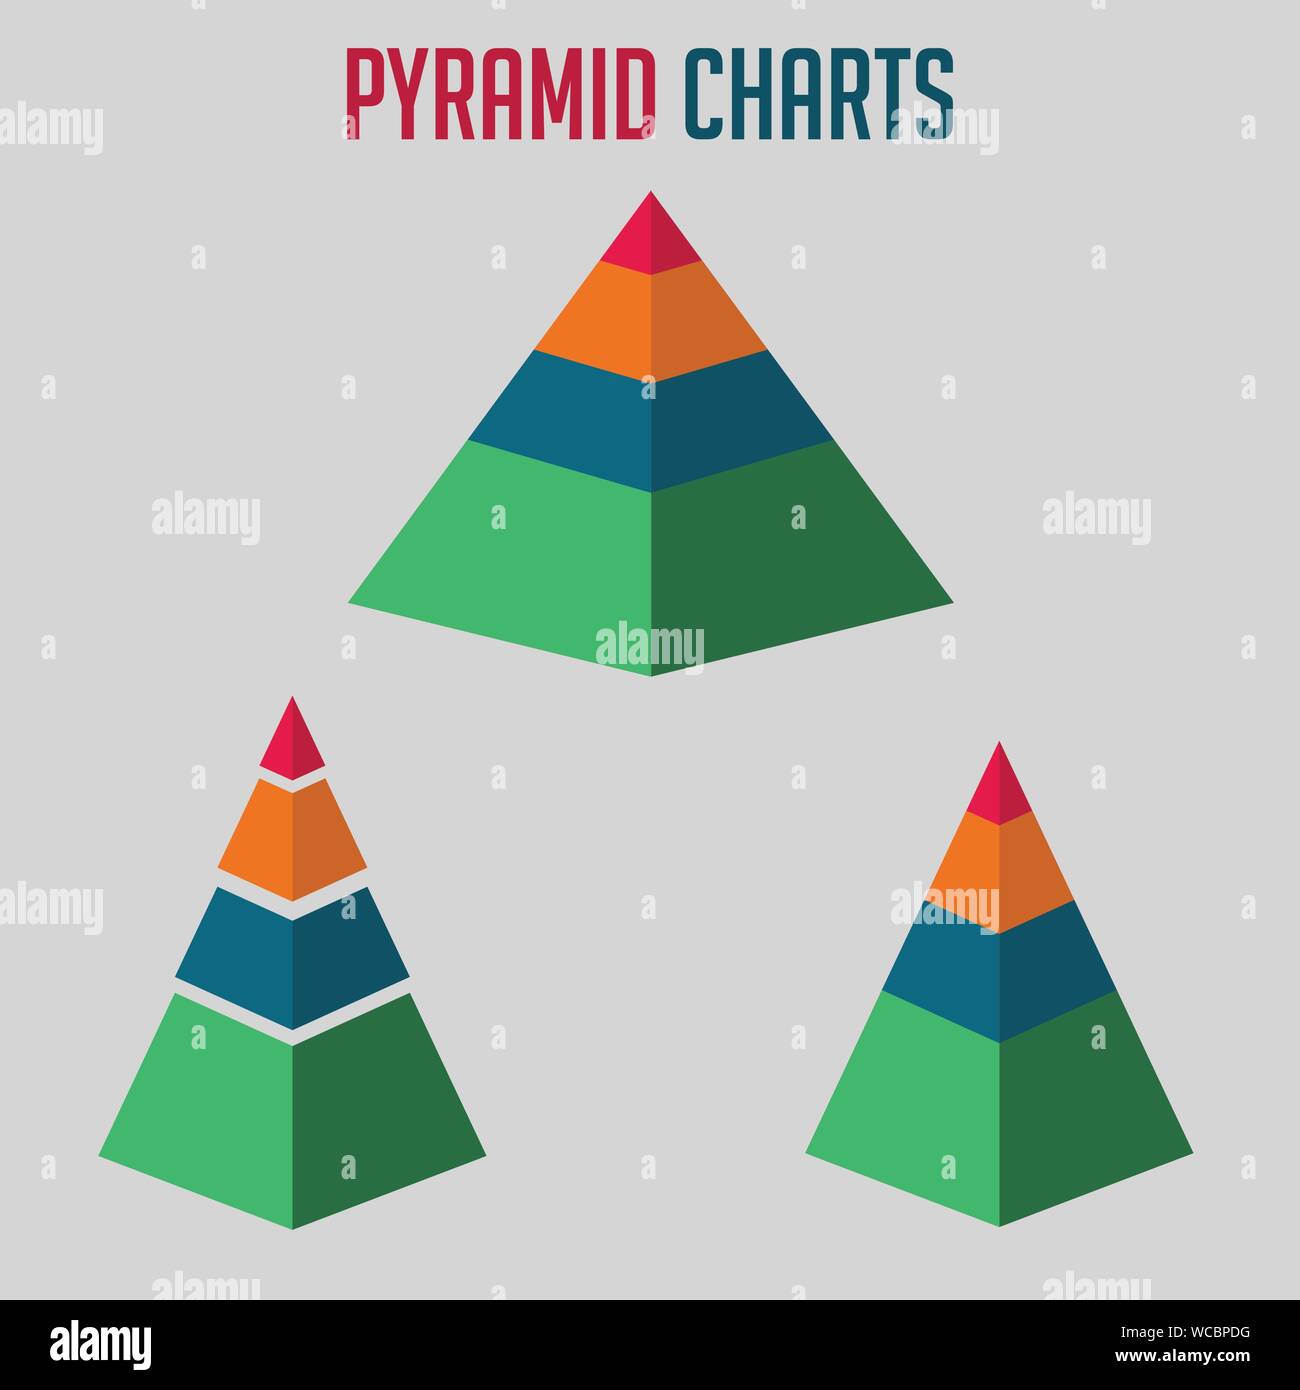 Pyramid charts vector illustration Stock Vector